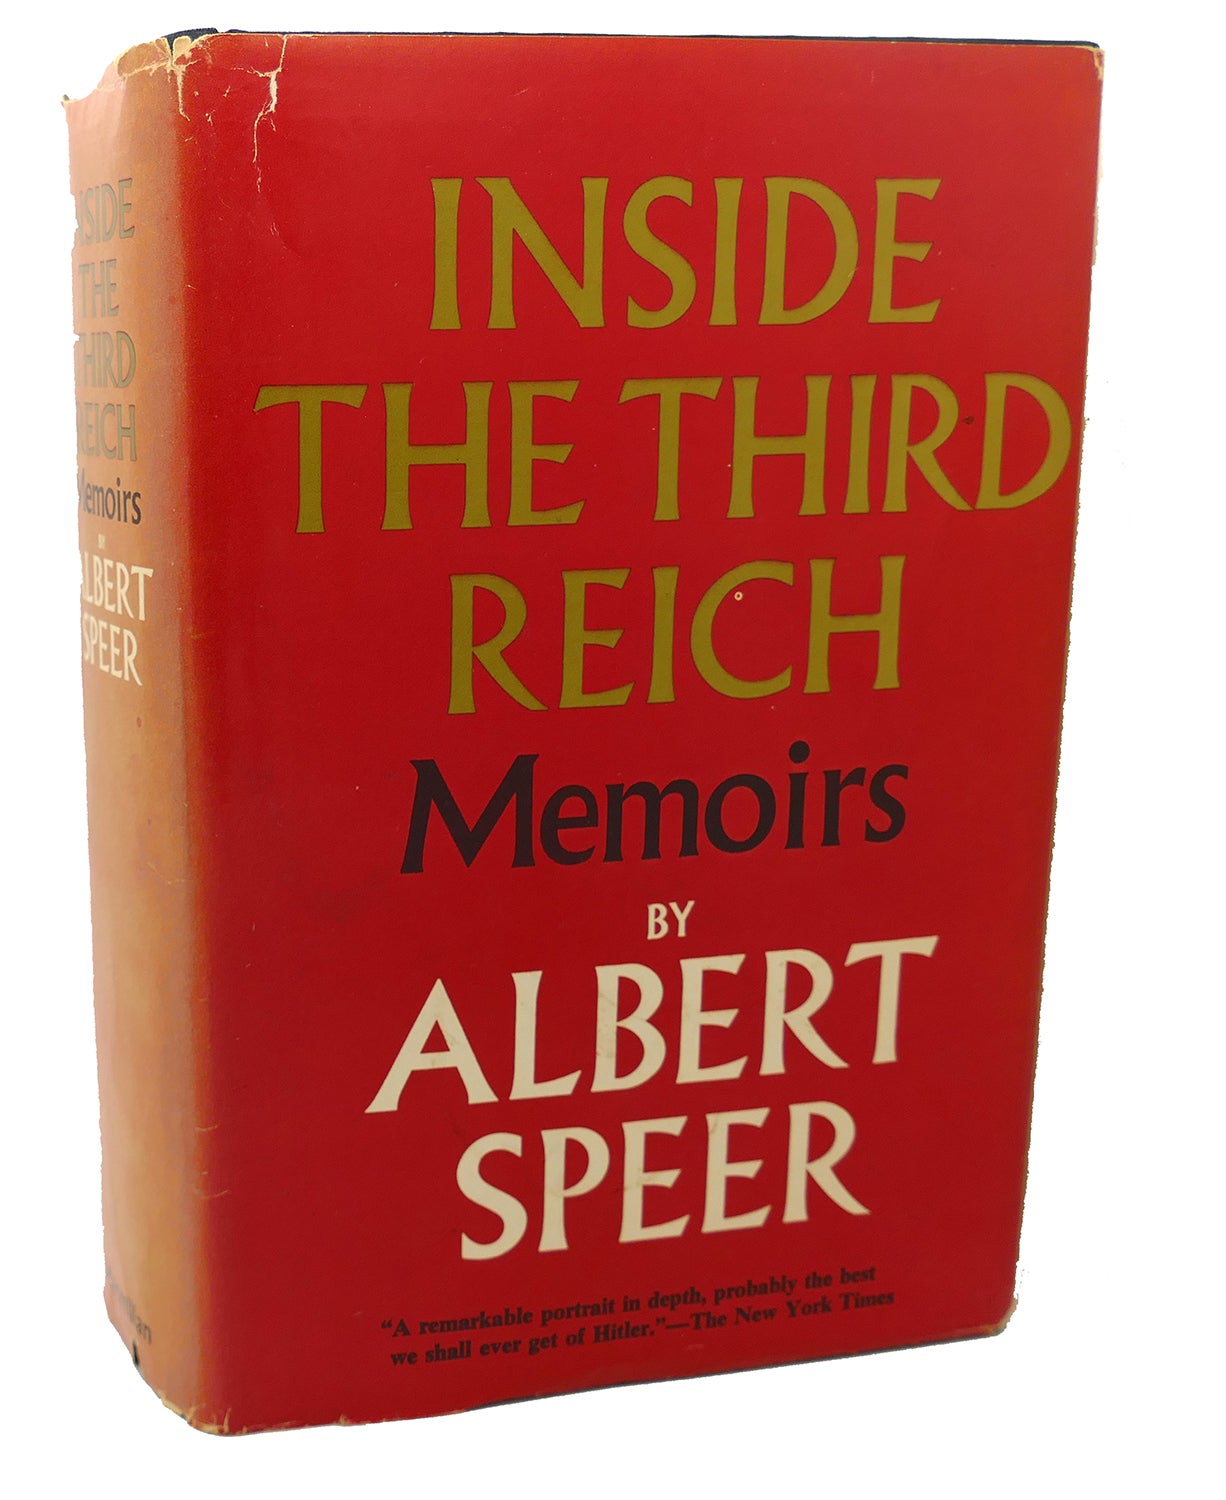 INSIDE THE THIRD REICH : Memoirs by Albert Speer on Rare Book Cellar